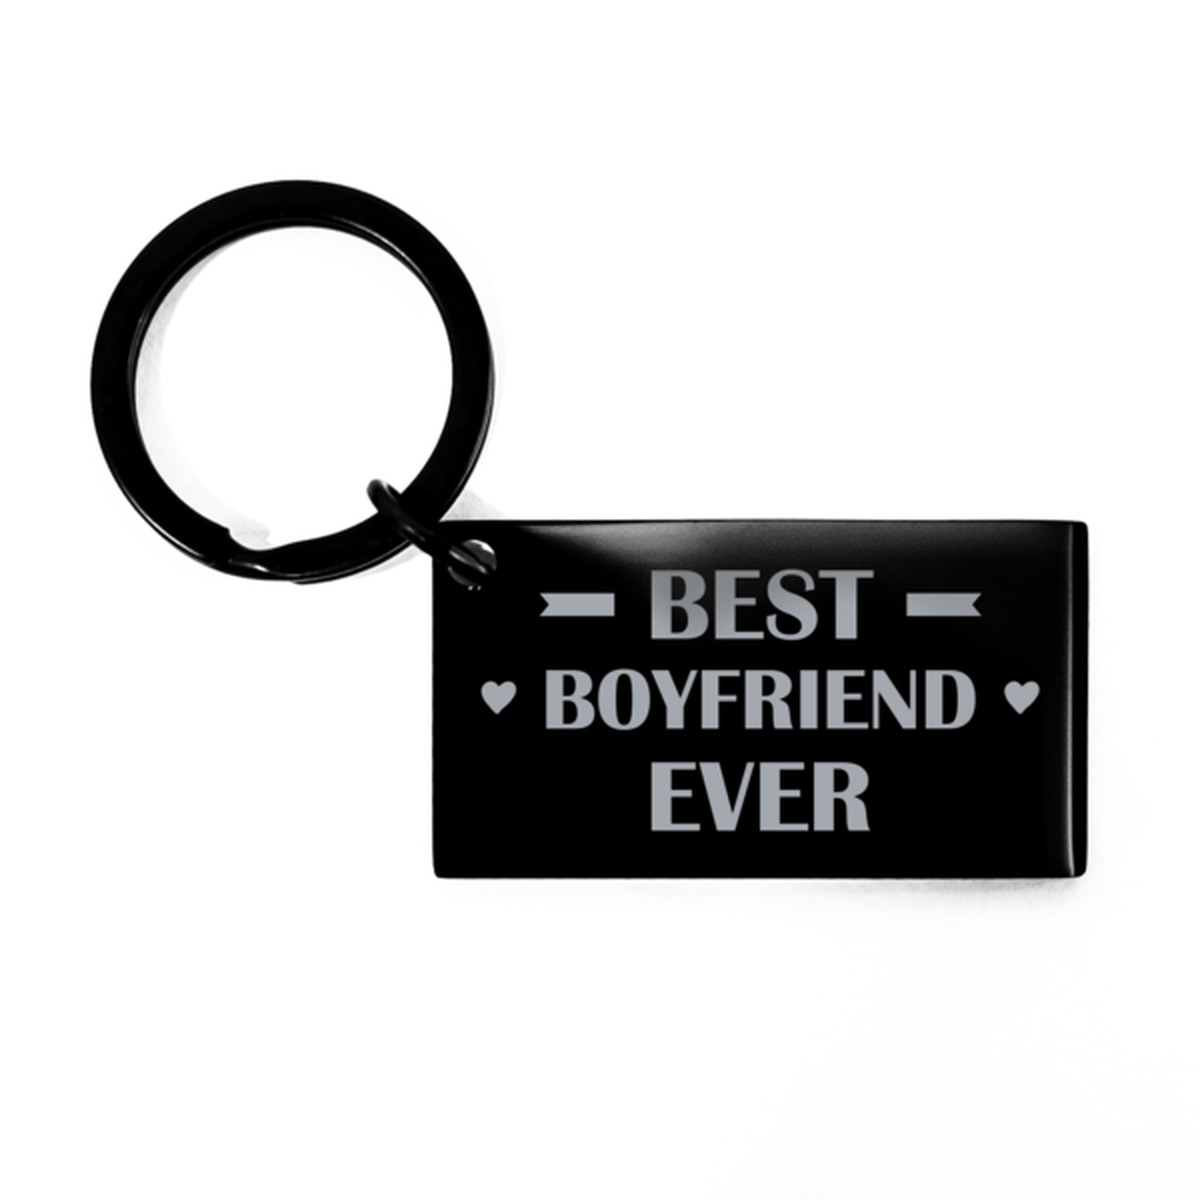 Best Boyfriend Ever Boyfriend Gifts, Funny Black Keychain For Boyfriend, Birthday Engraved Keyring Presents For Men